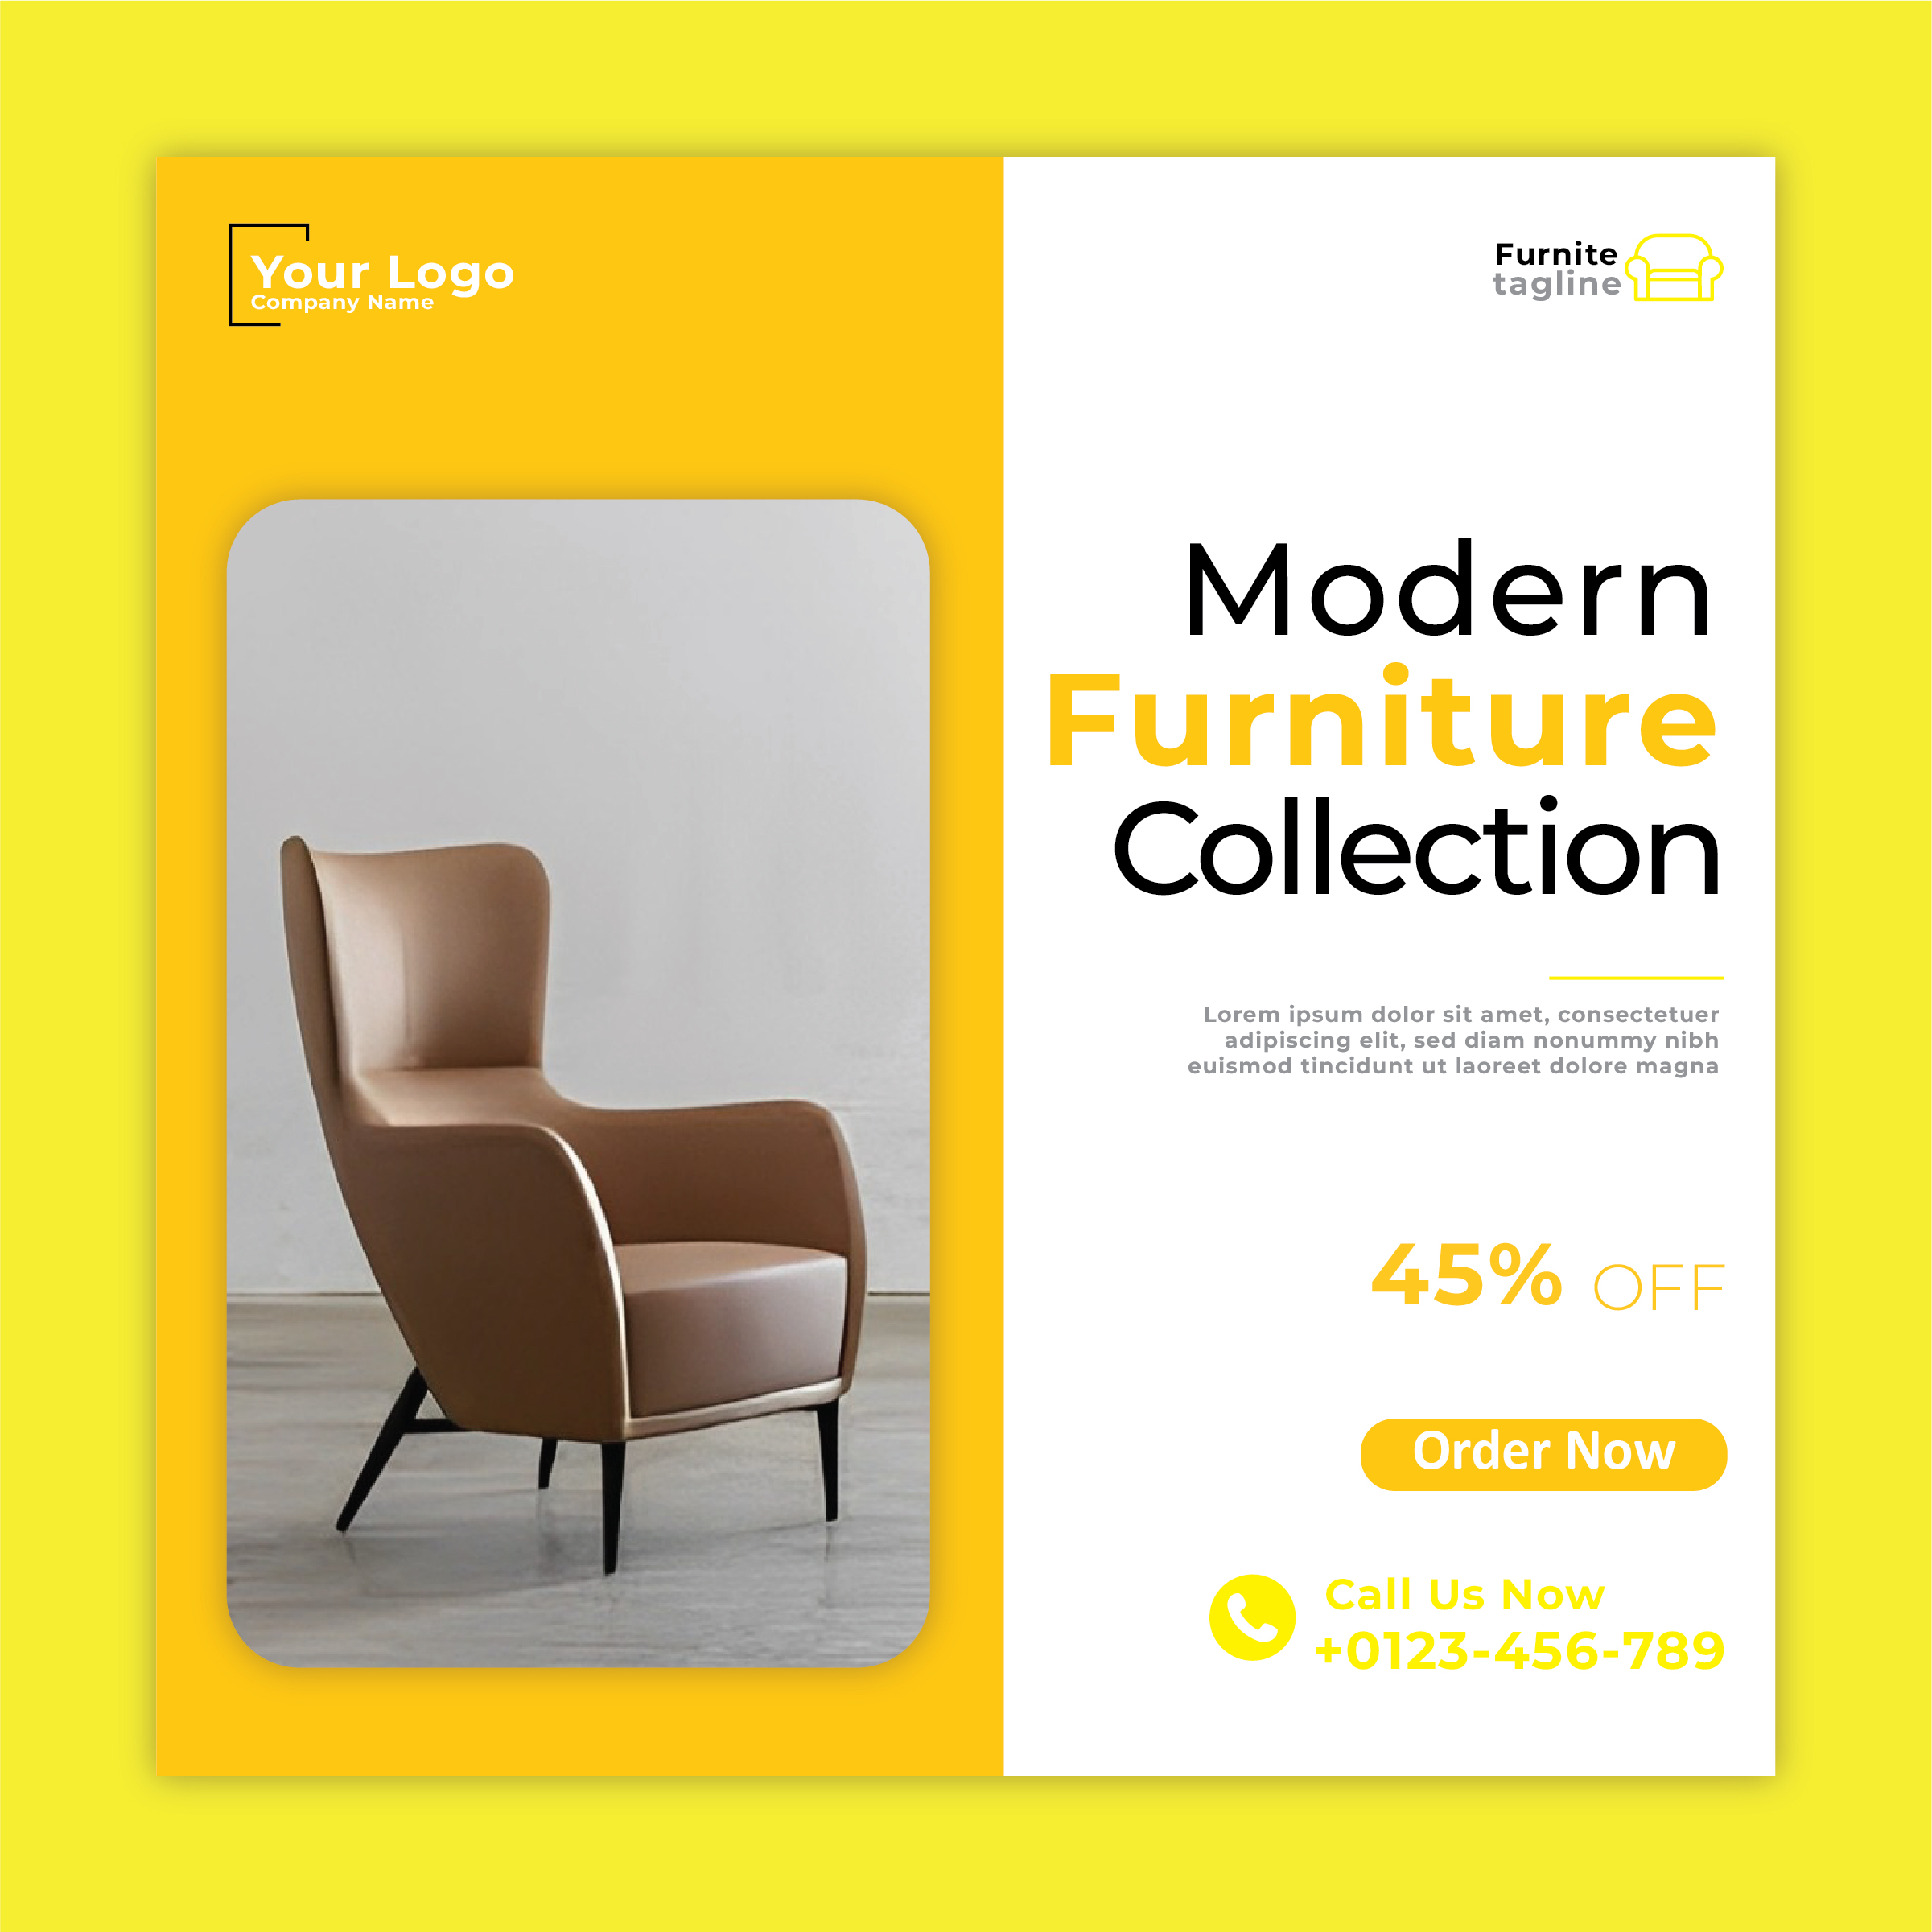 Modern Furniture  Creactivity & Design in Adobe ilustration  For Free In Corel Draw Design 2024